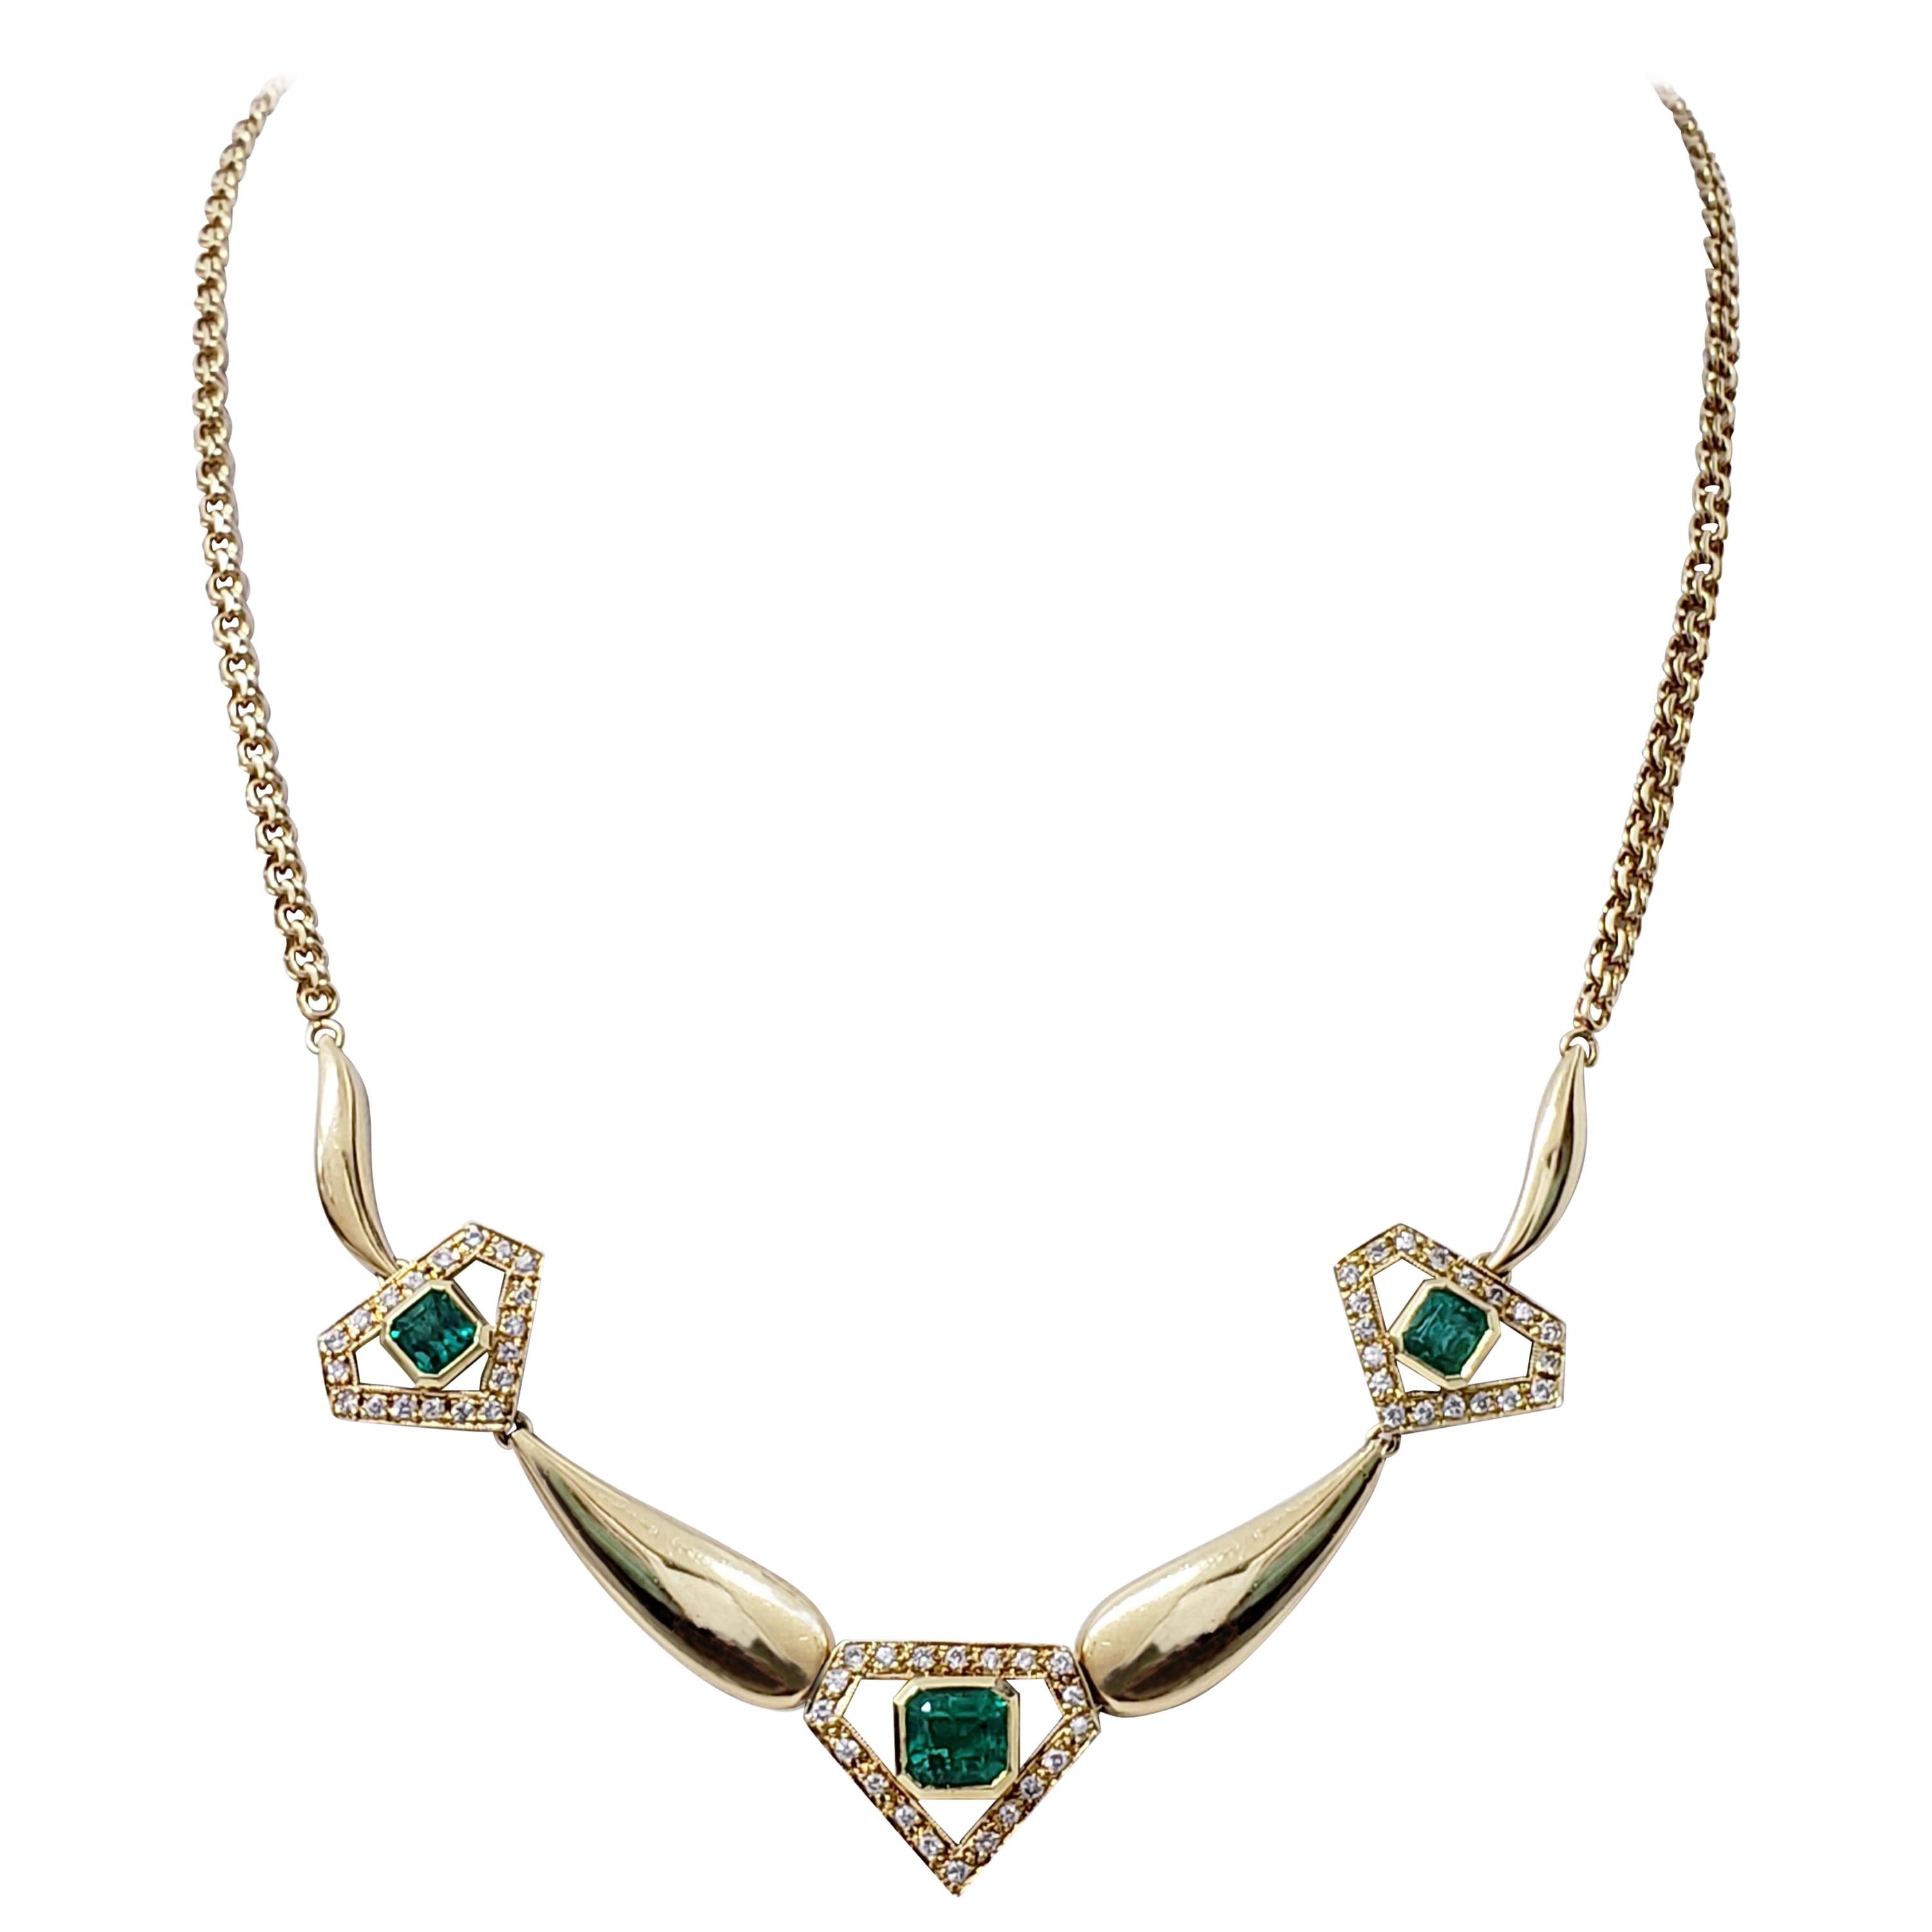 Floating Diamond Frame Design 4.00 Carat Colombian Emerald & Diamond Necklace